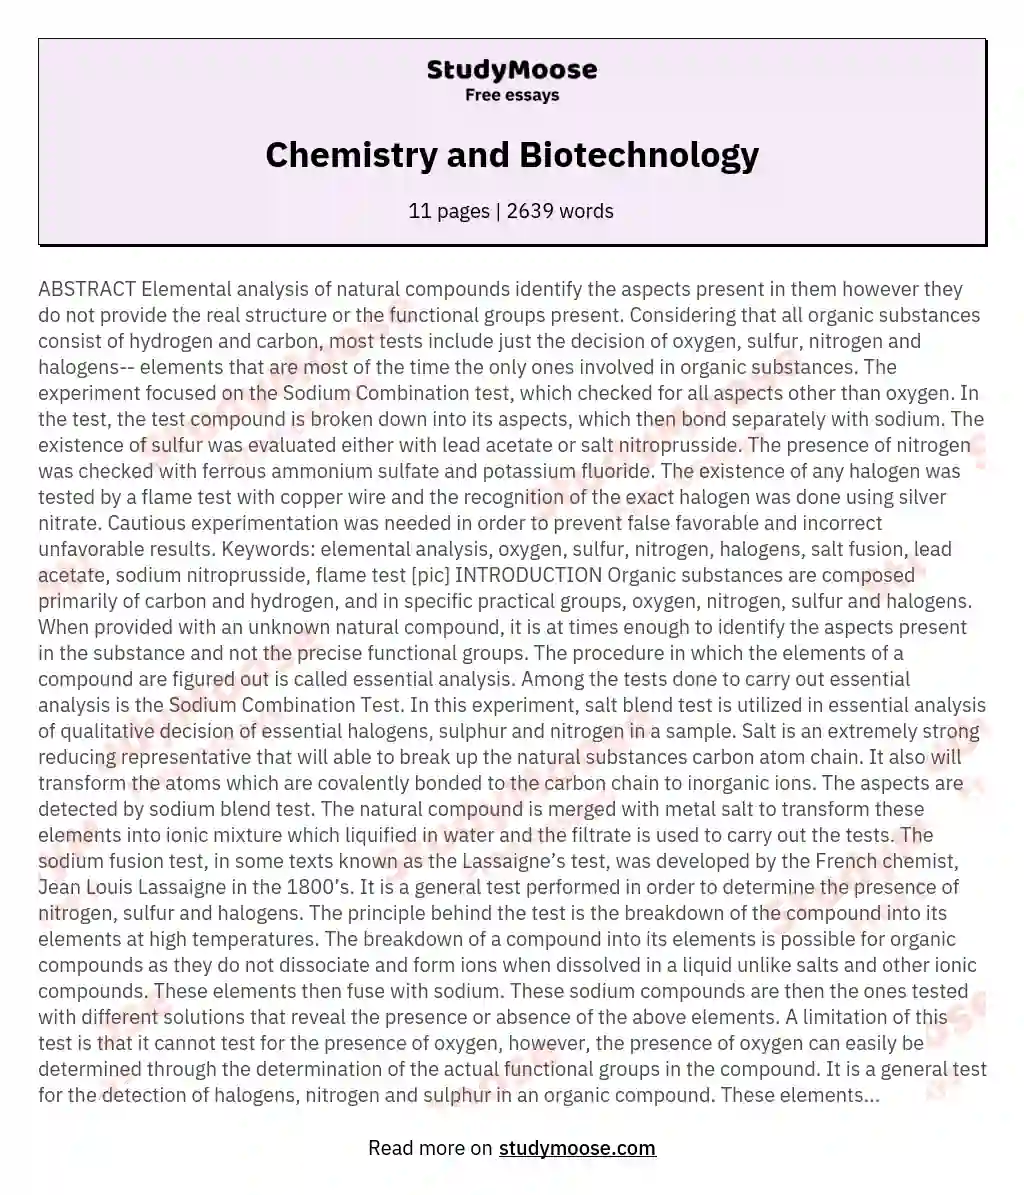 Chemistry and Biotechnology essay